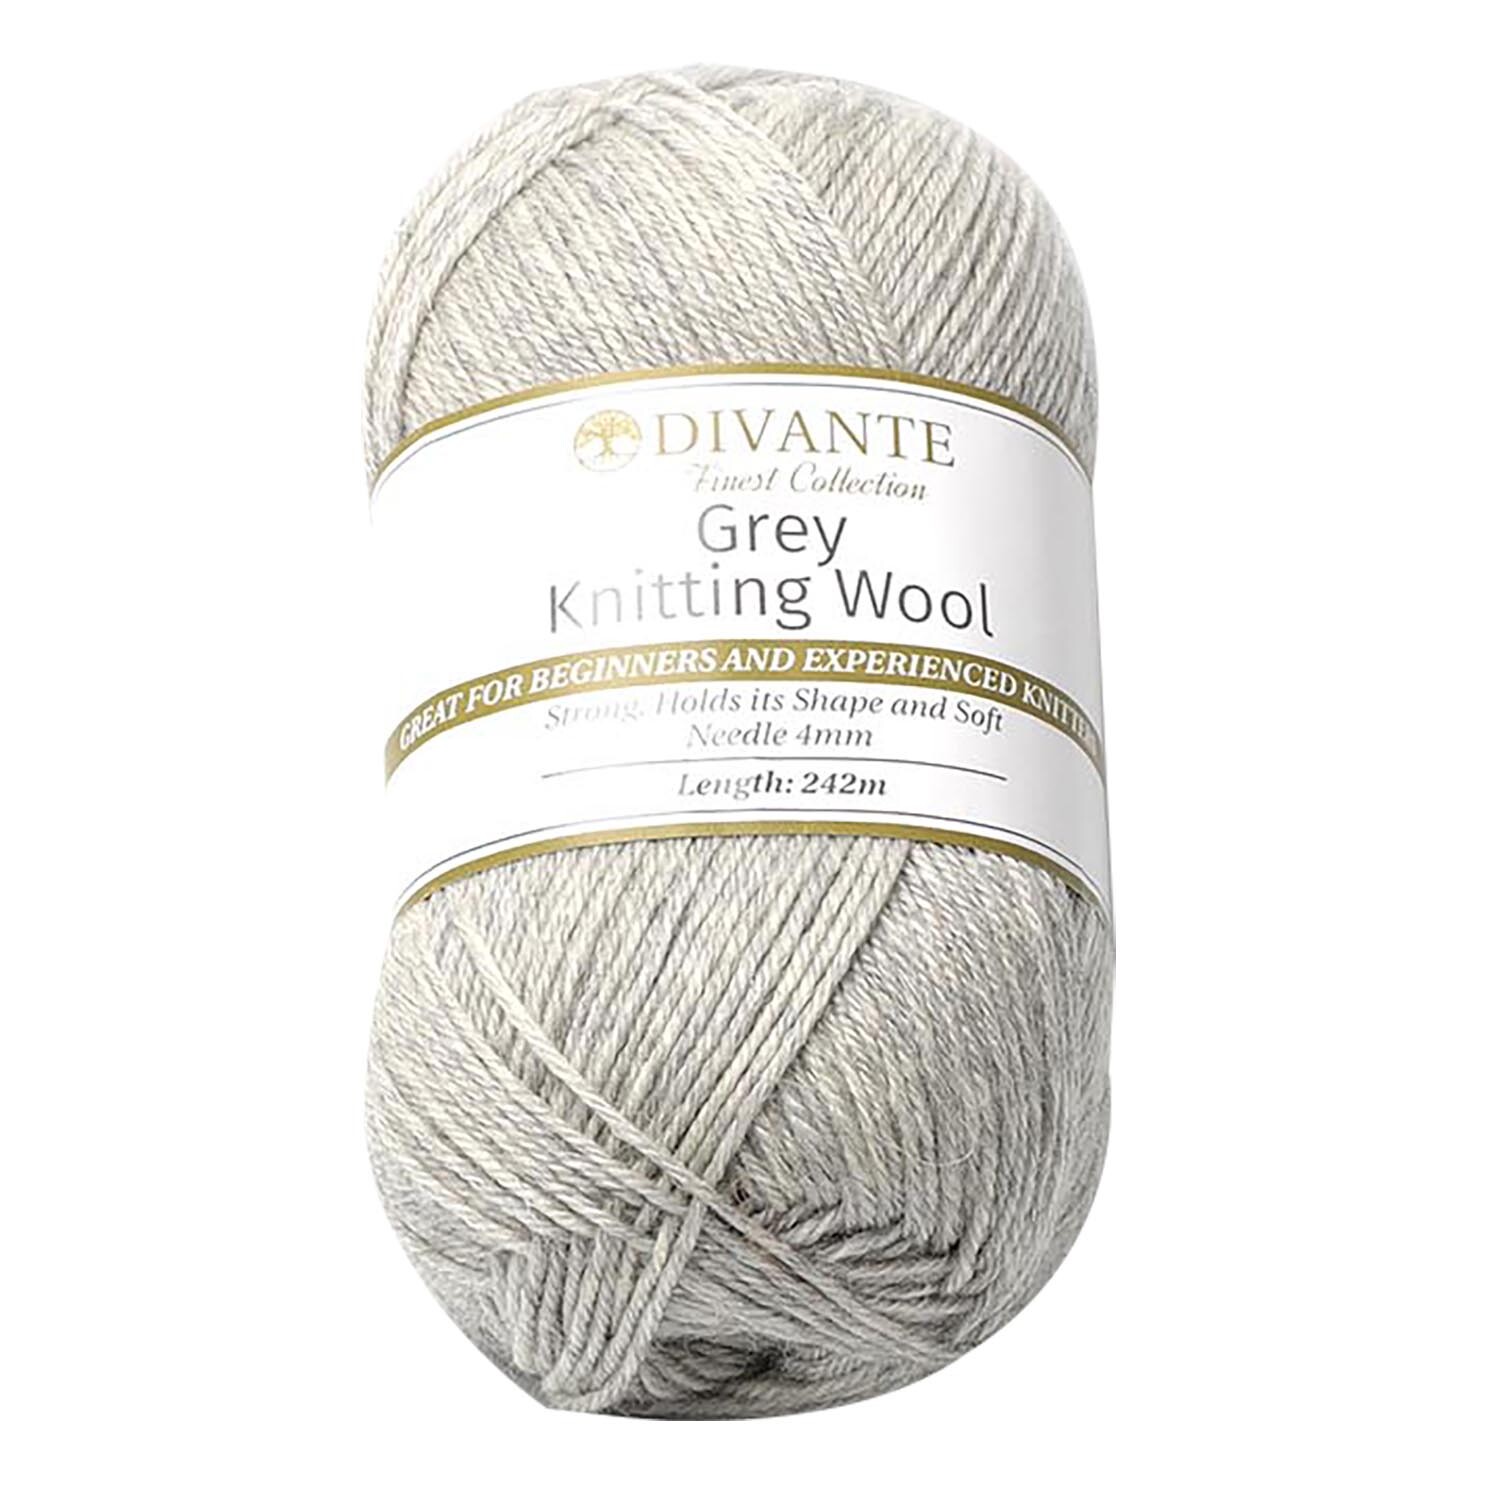 Divante Grey Knitting Wool 140g Image